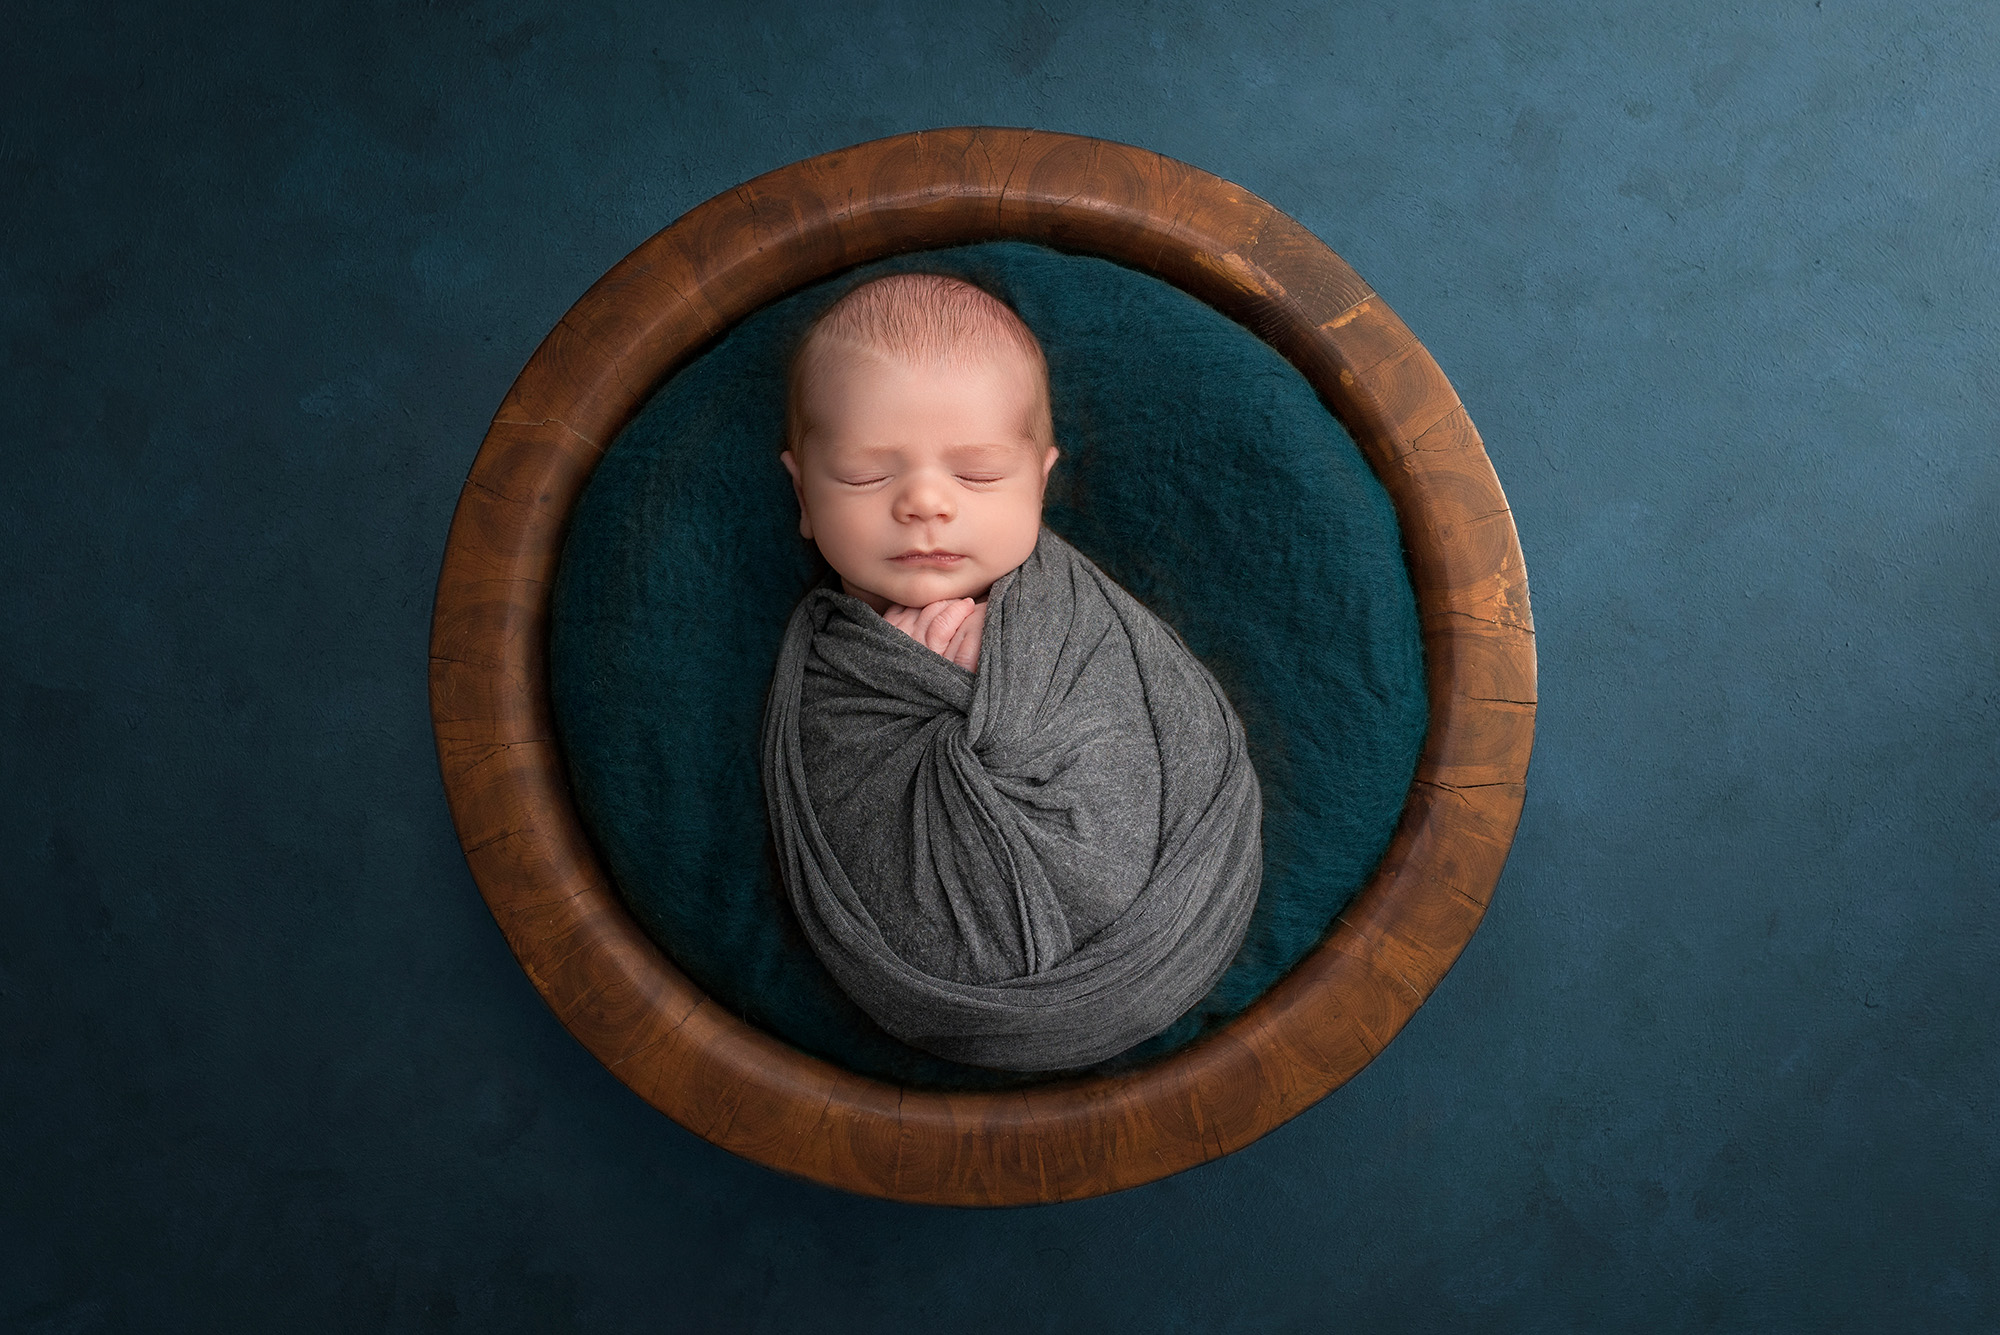 newborn baby boy asleep in wooden bowl on teal background